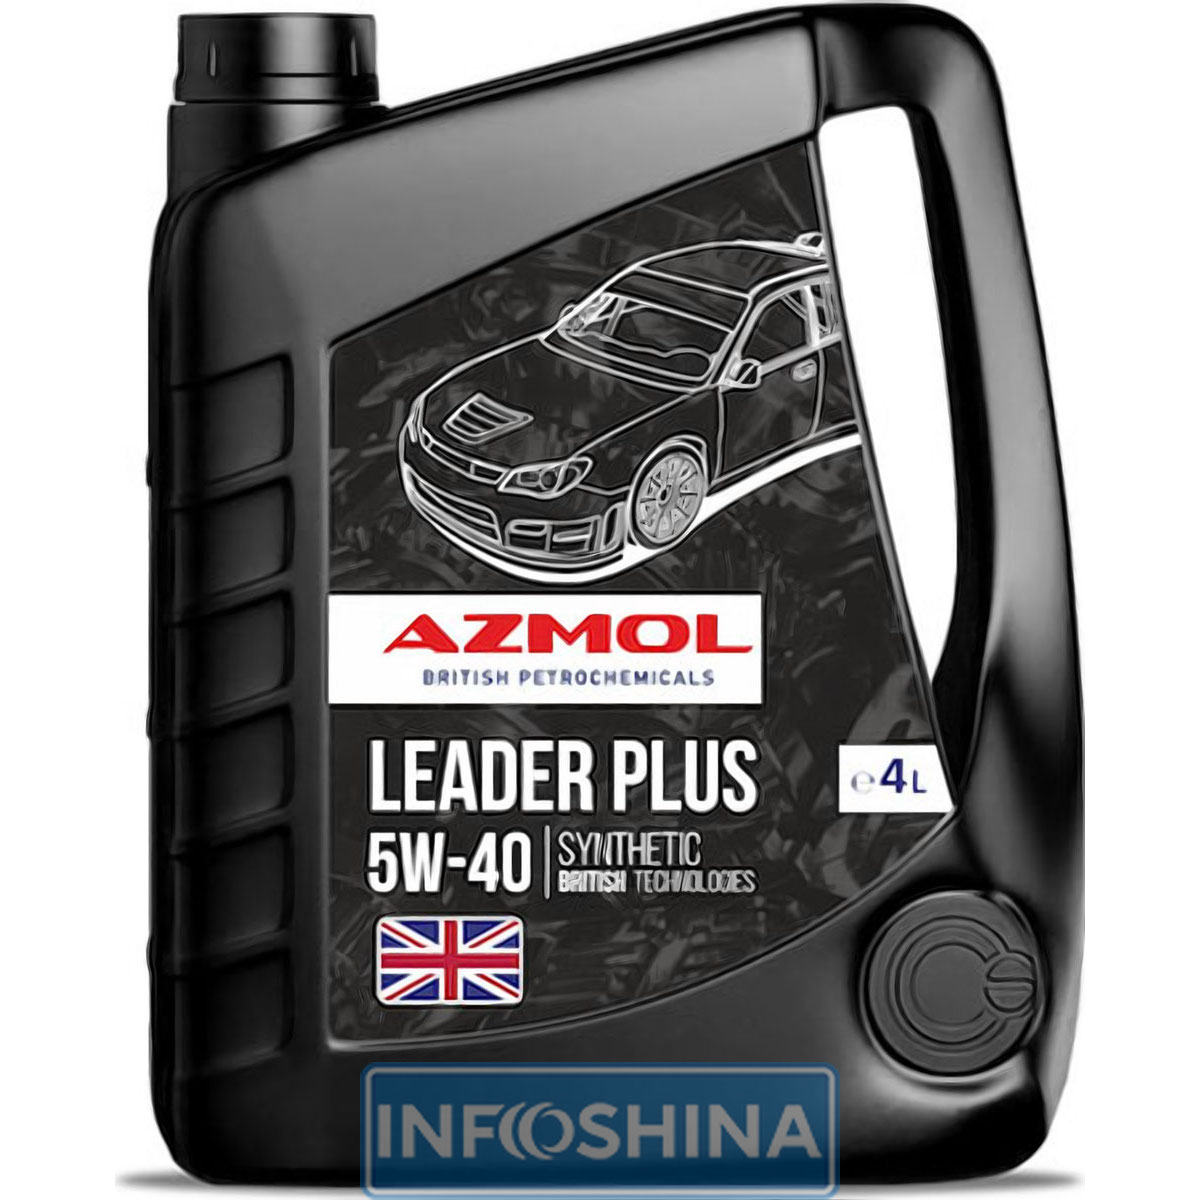 Купить масло Azmol Leader Plus 5W-40 (4л)